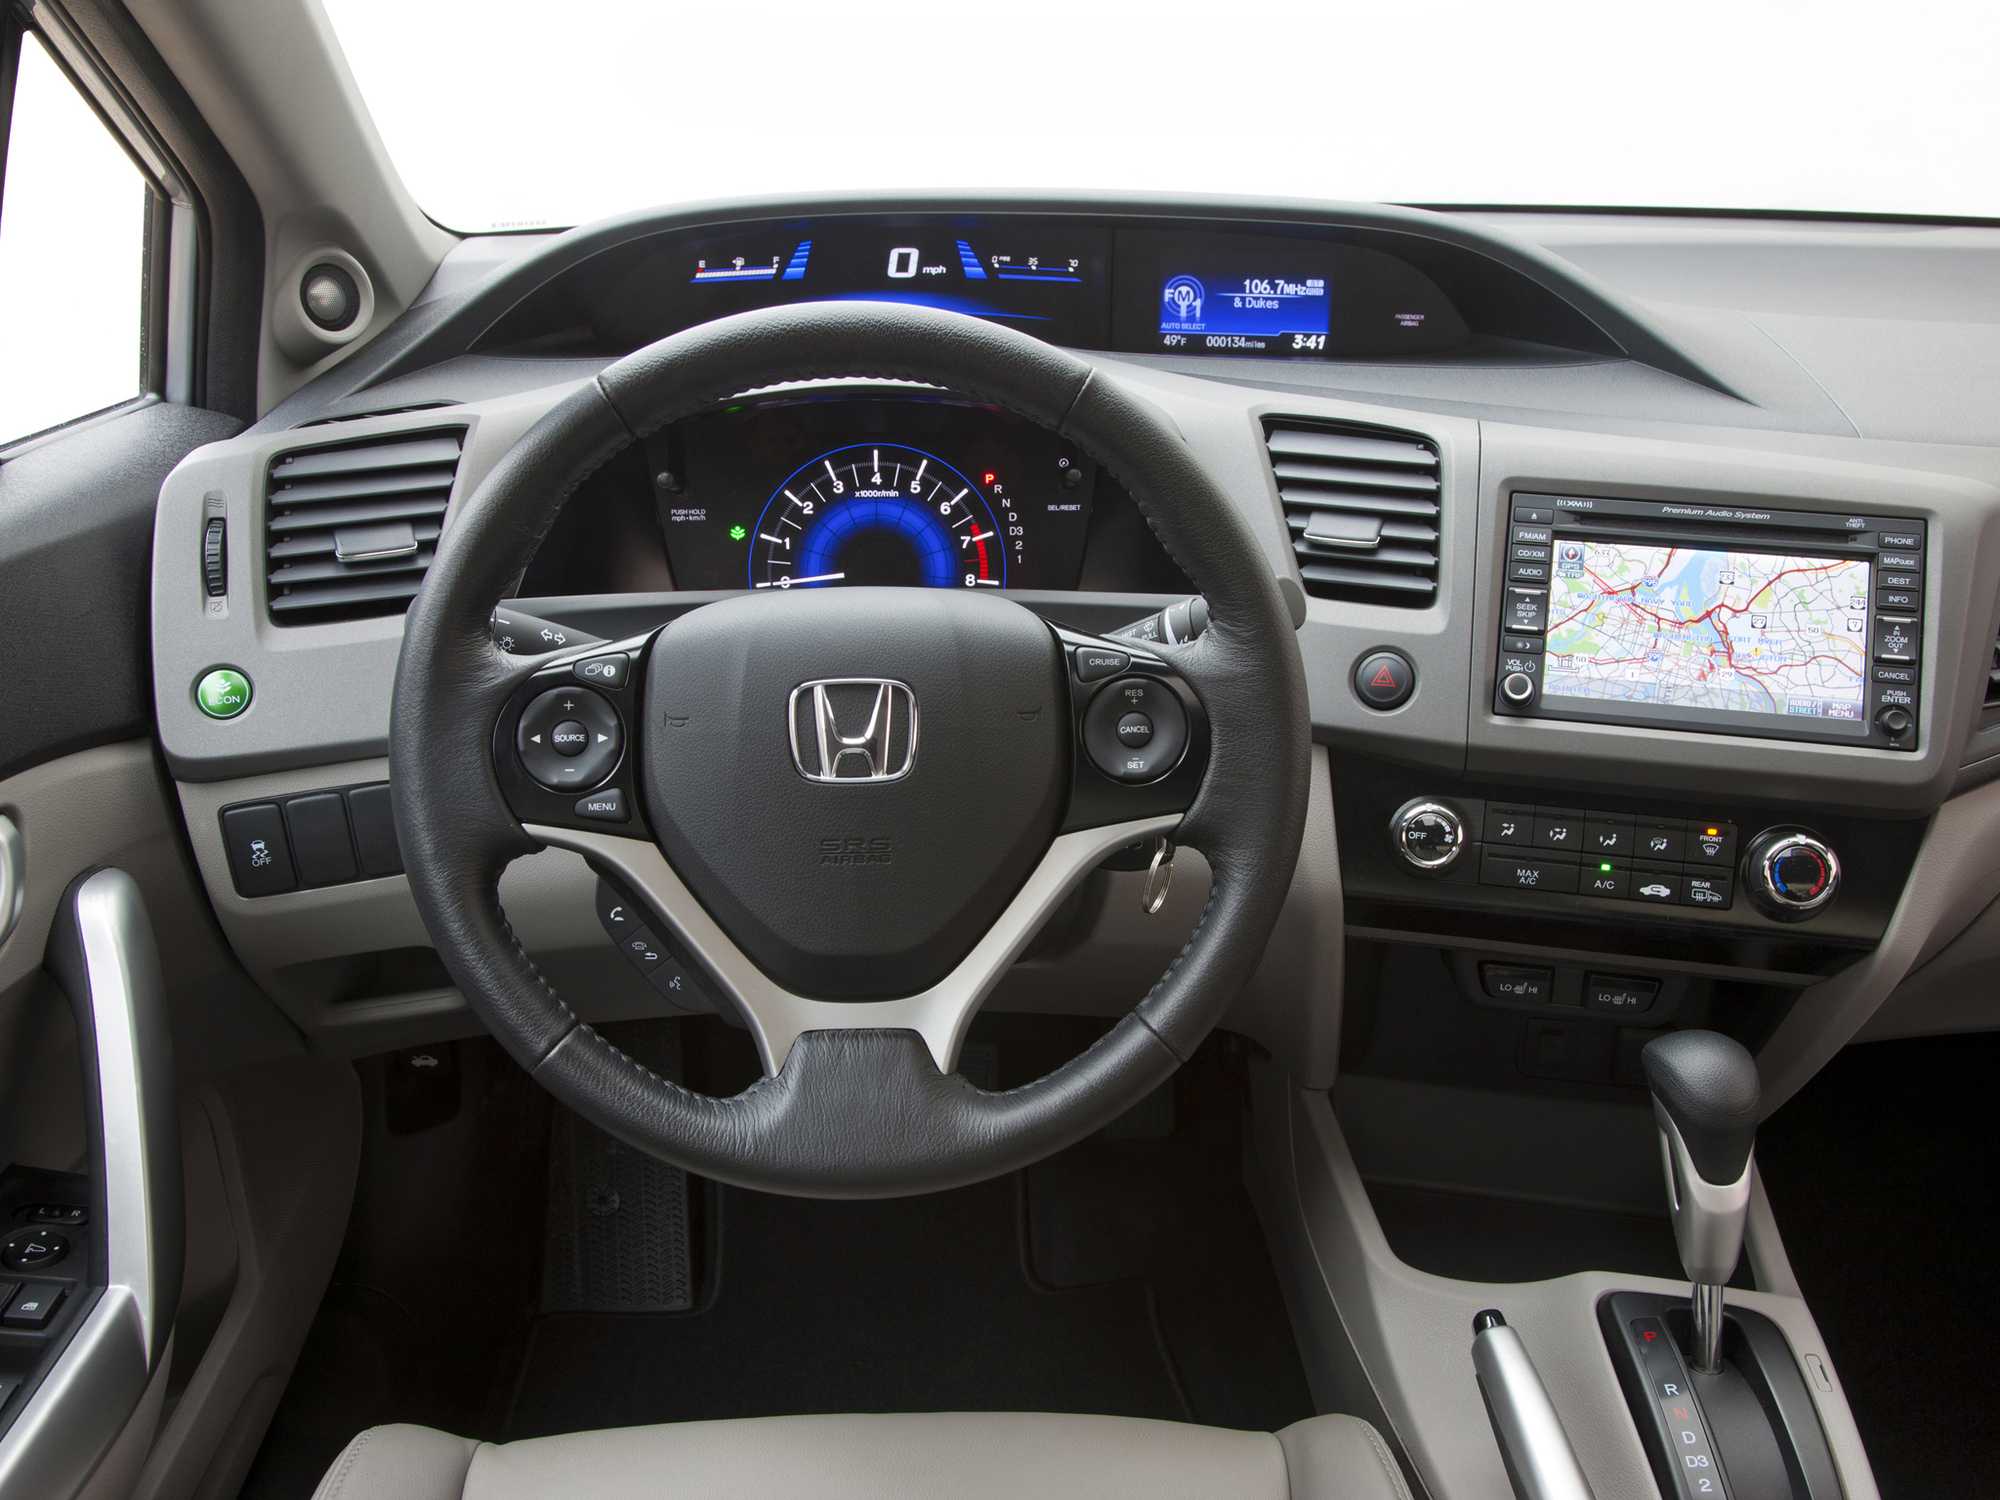 Honda civic viii (2006-2011) - проблемы и неисправности